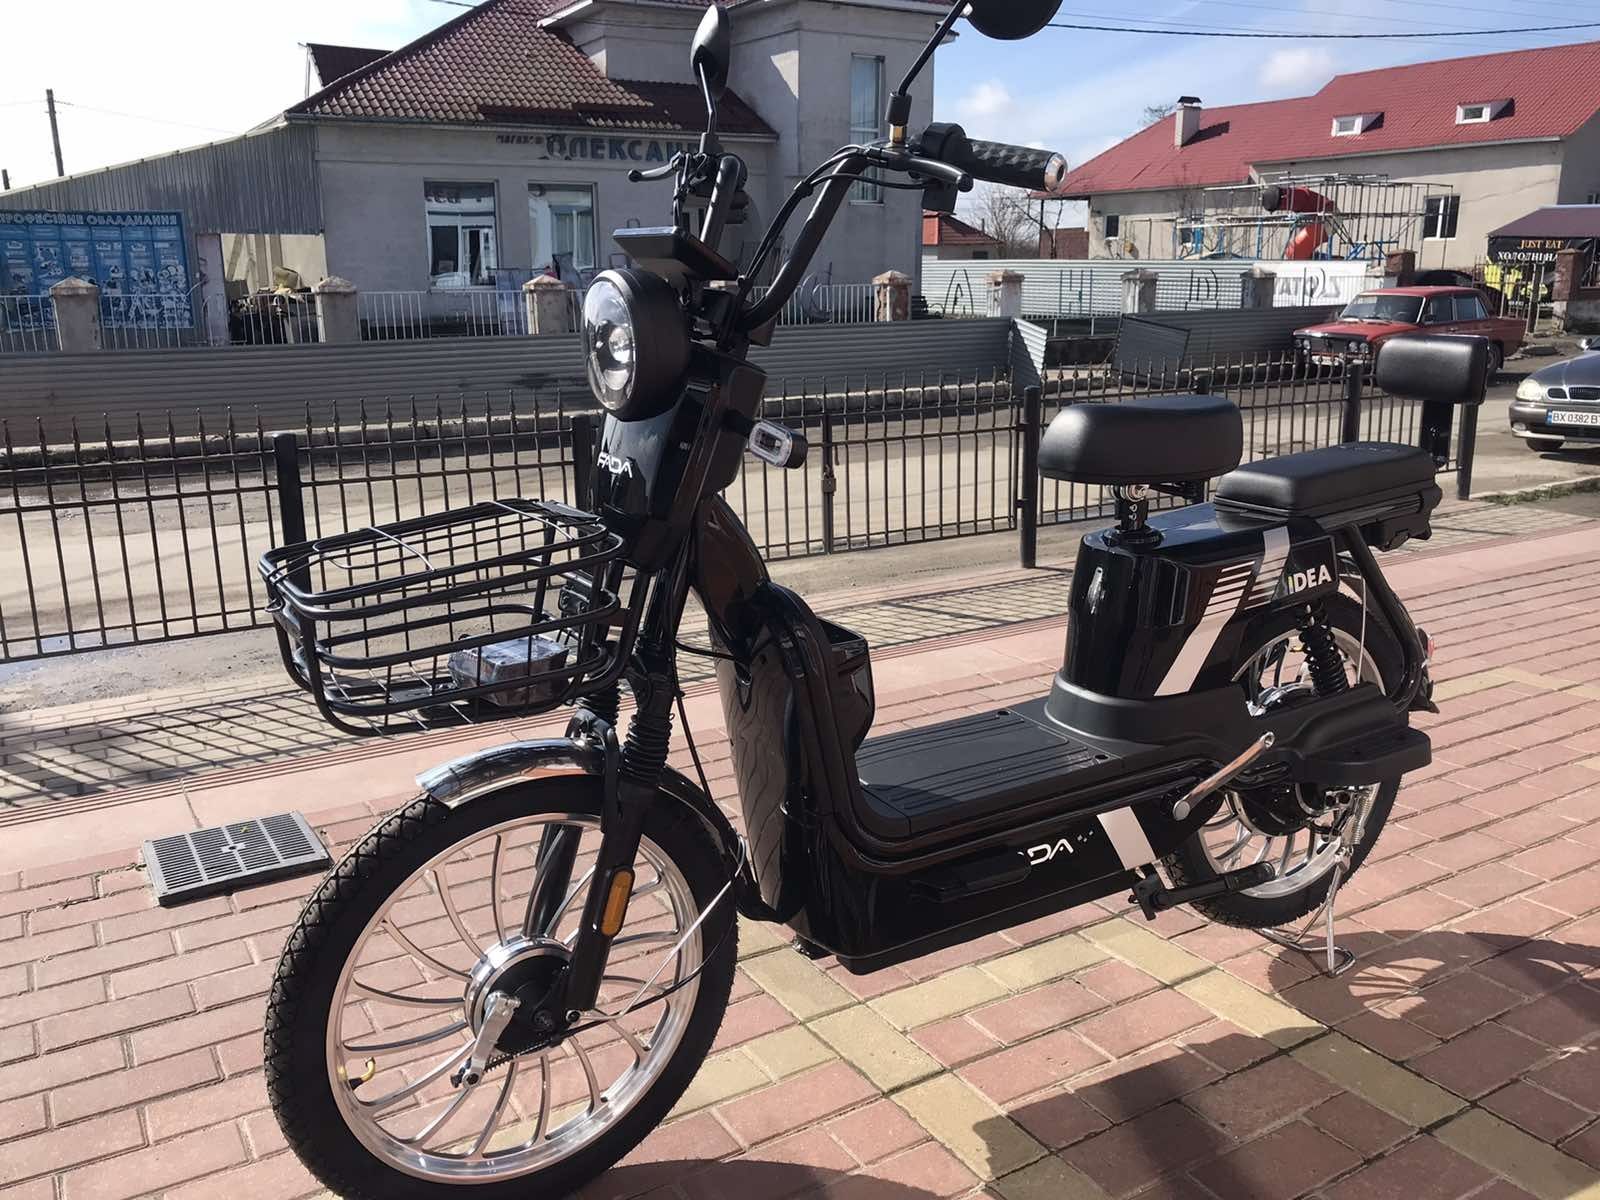 Електричний велосипед FADA IDEA 600w